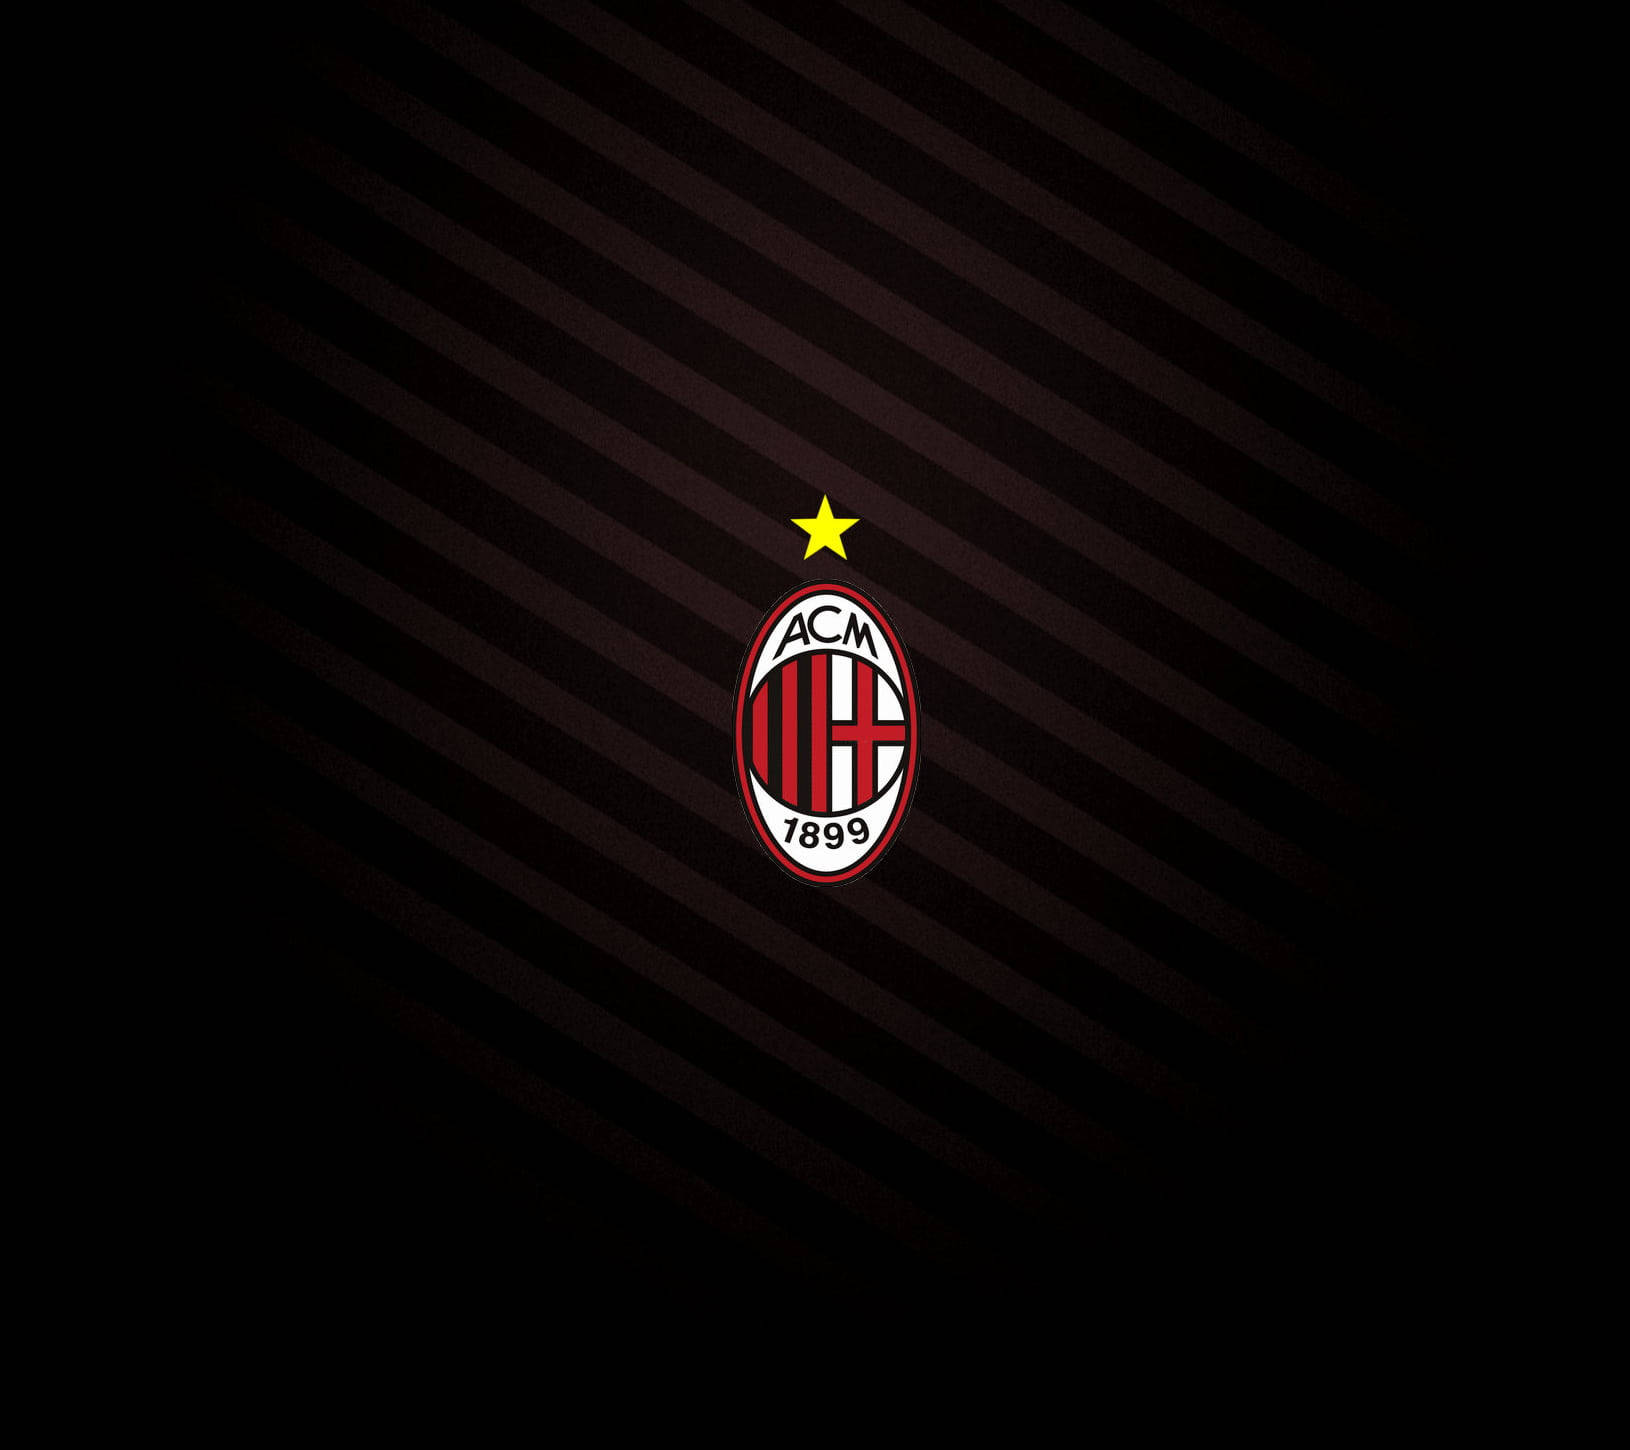 Ac Milan Logo With Star Background